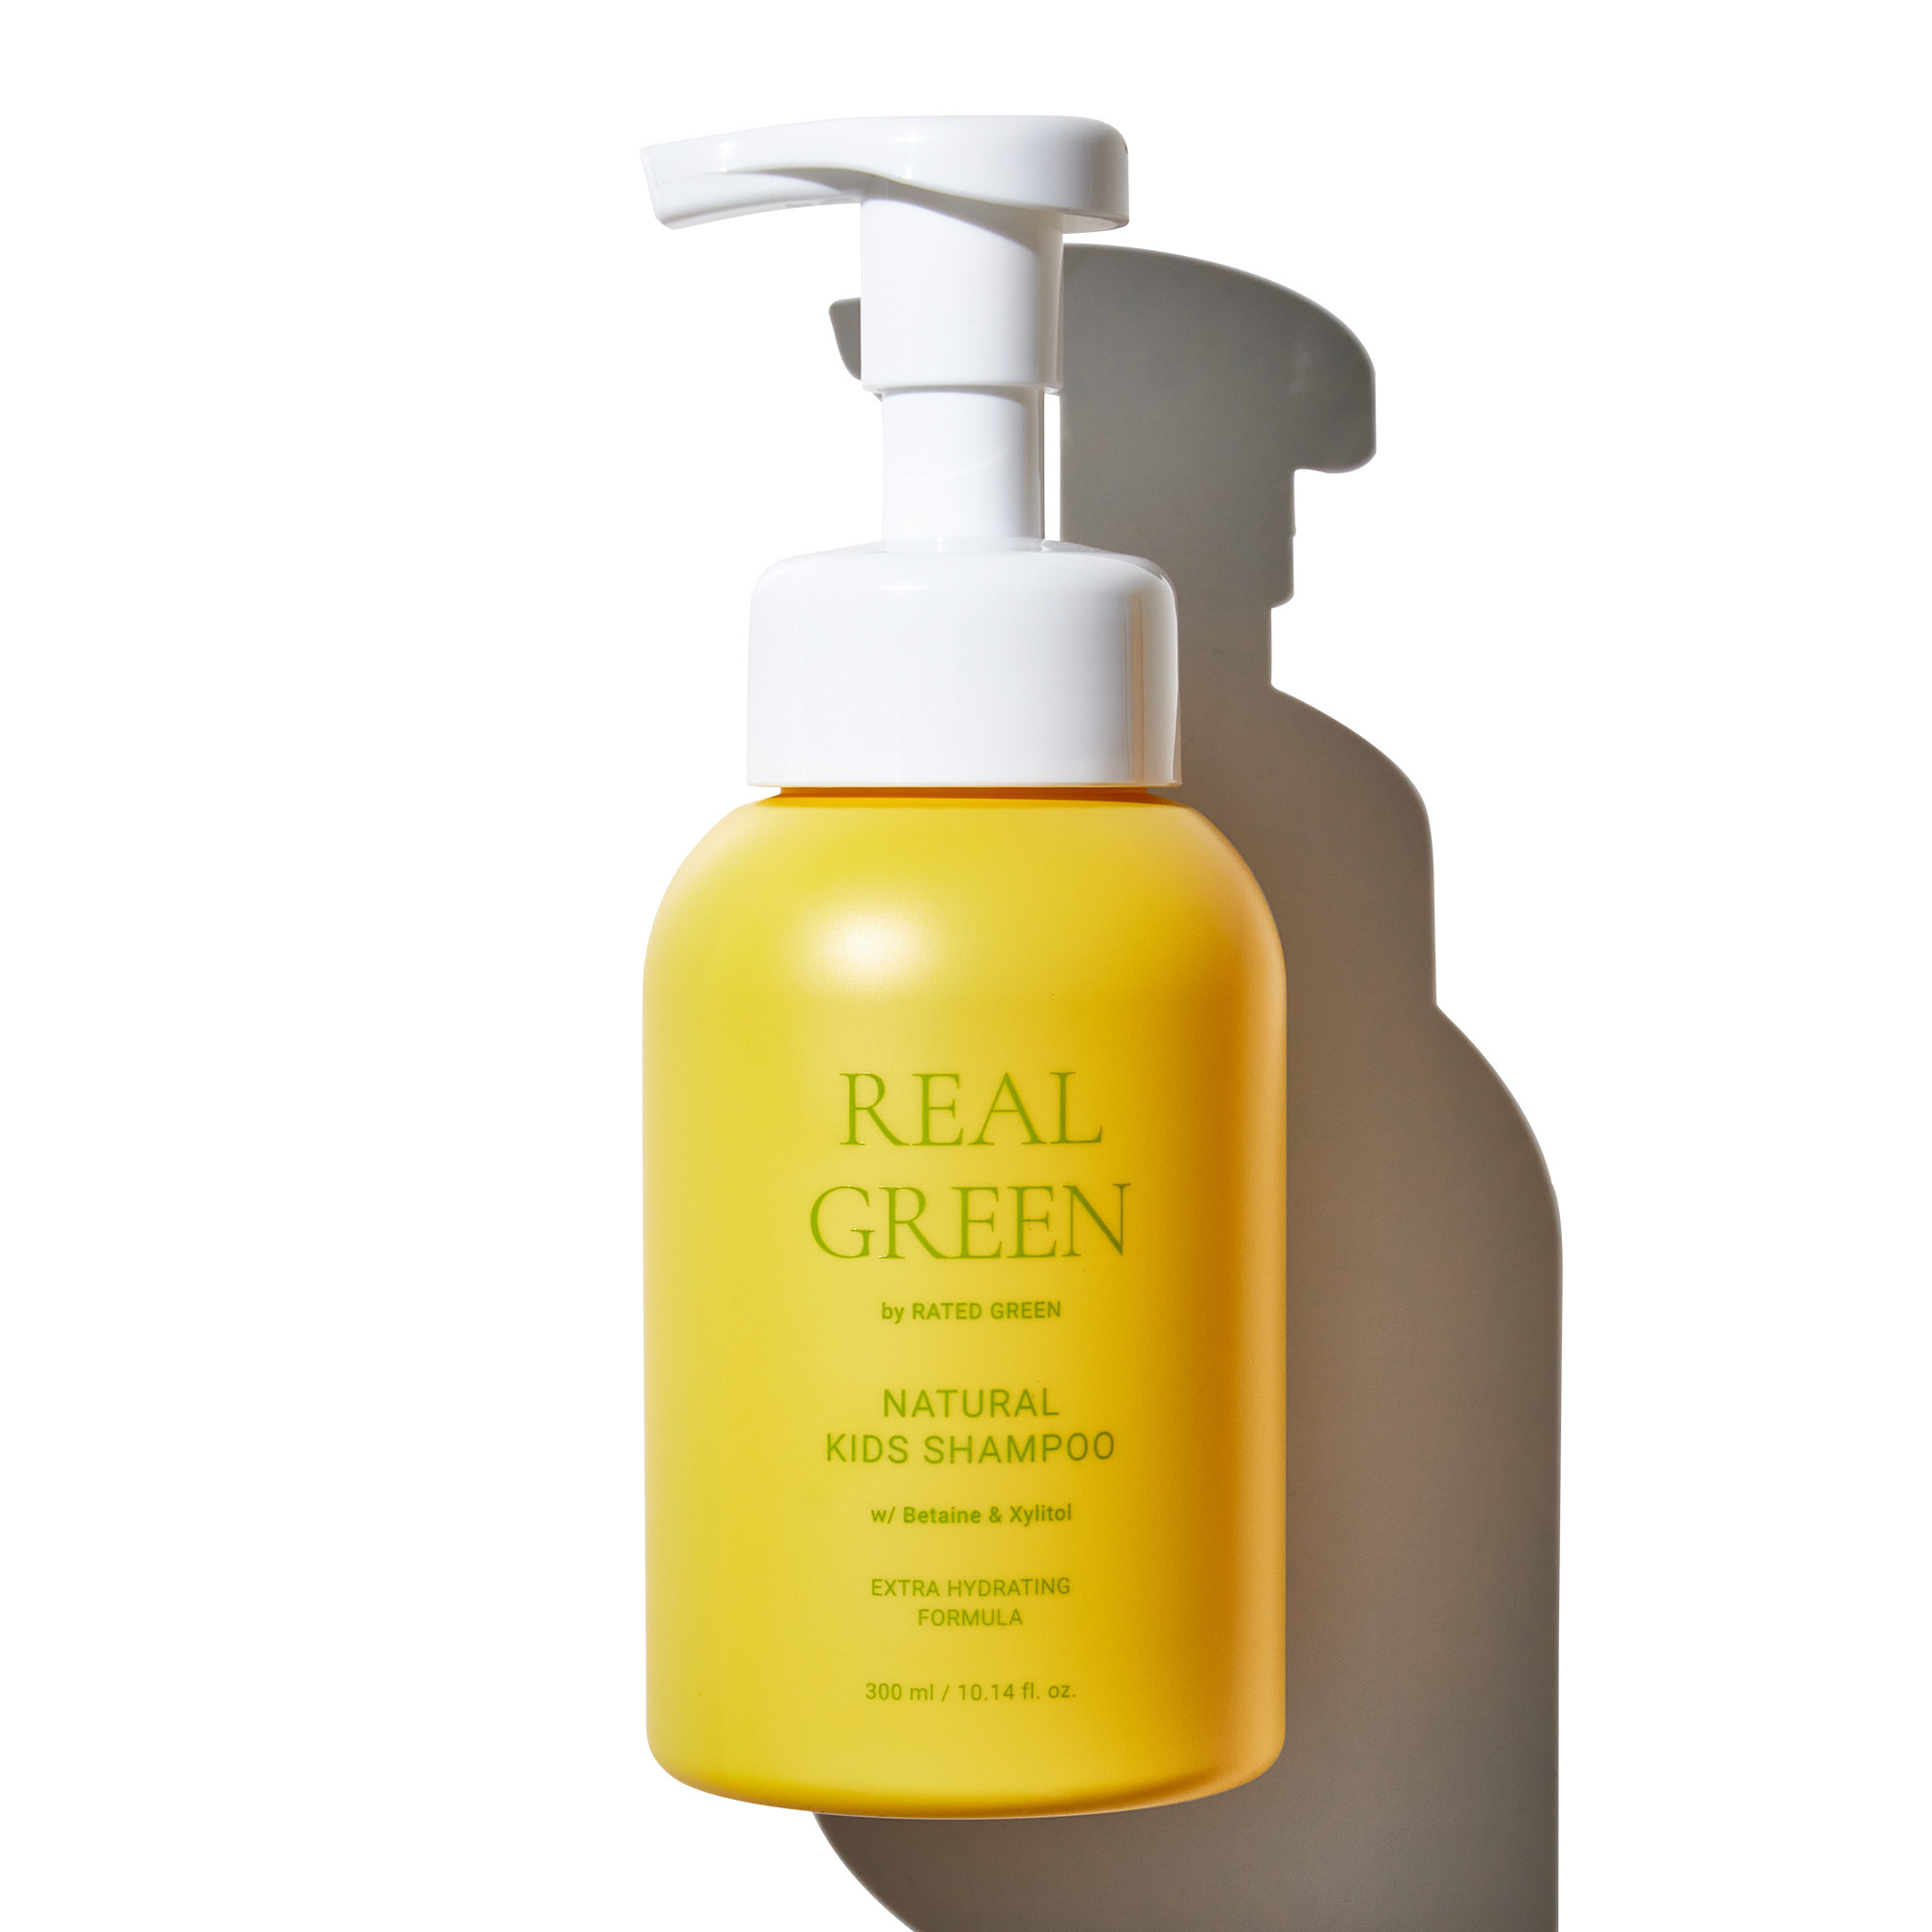 Rated Green Real Green Natural Kids Shampoo Шампунь для детей на основе натуральных экстрактов